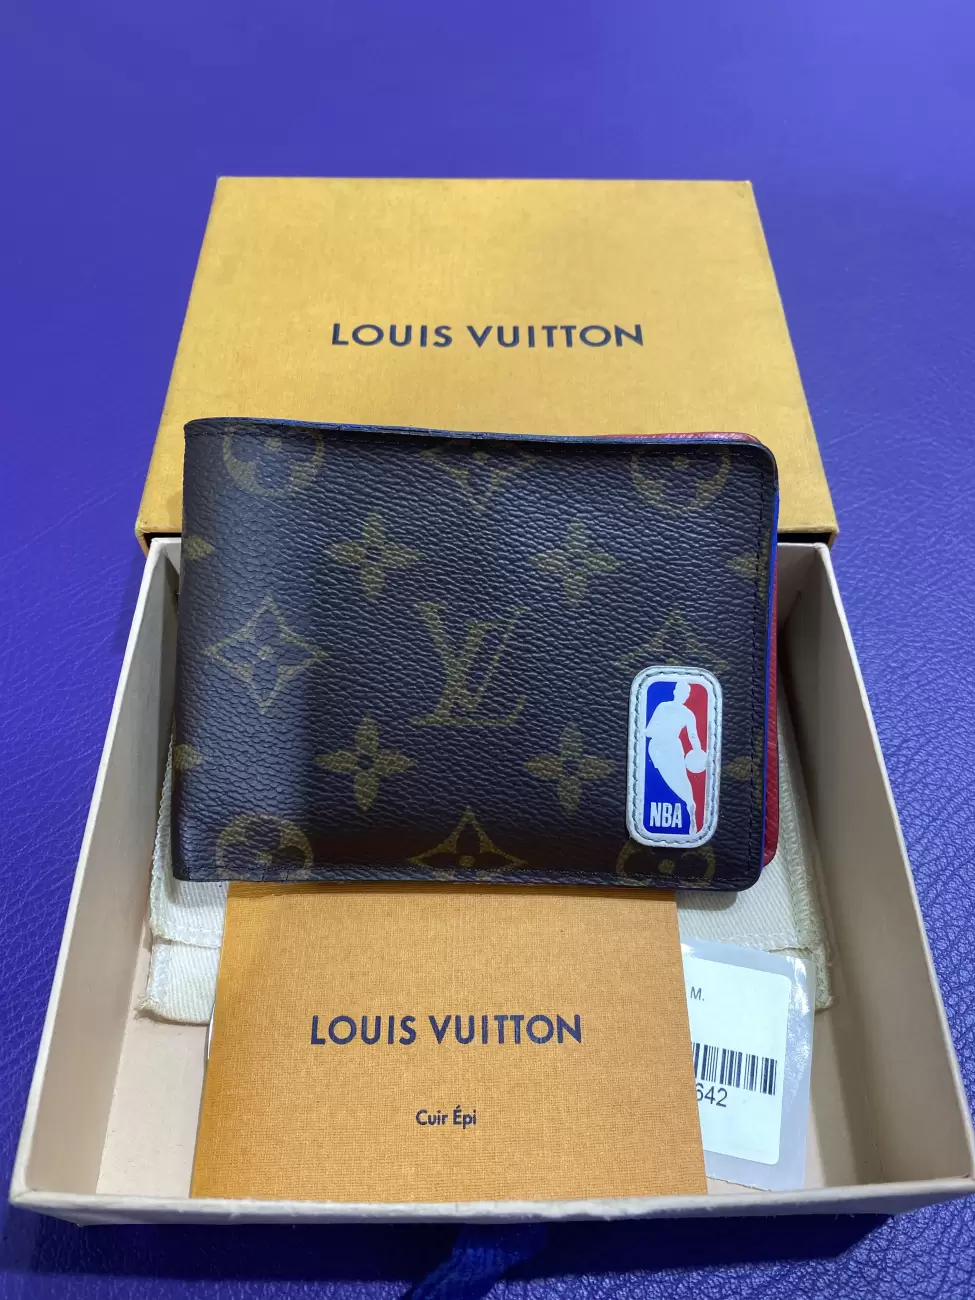 34383 - Louis Vuitton X Nba Multiplayer Monogram Wallet | Item Details ...